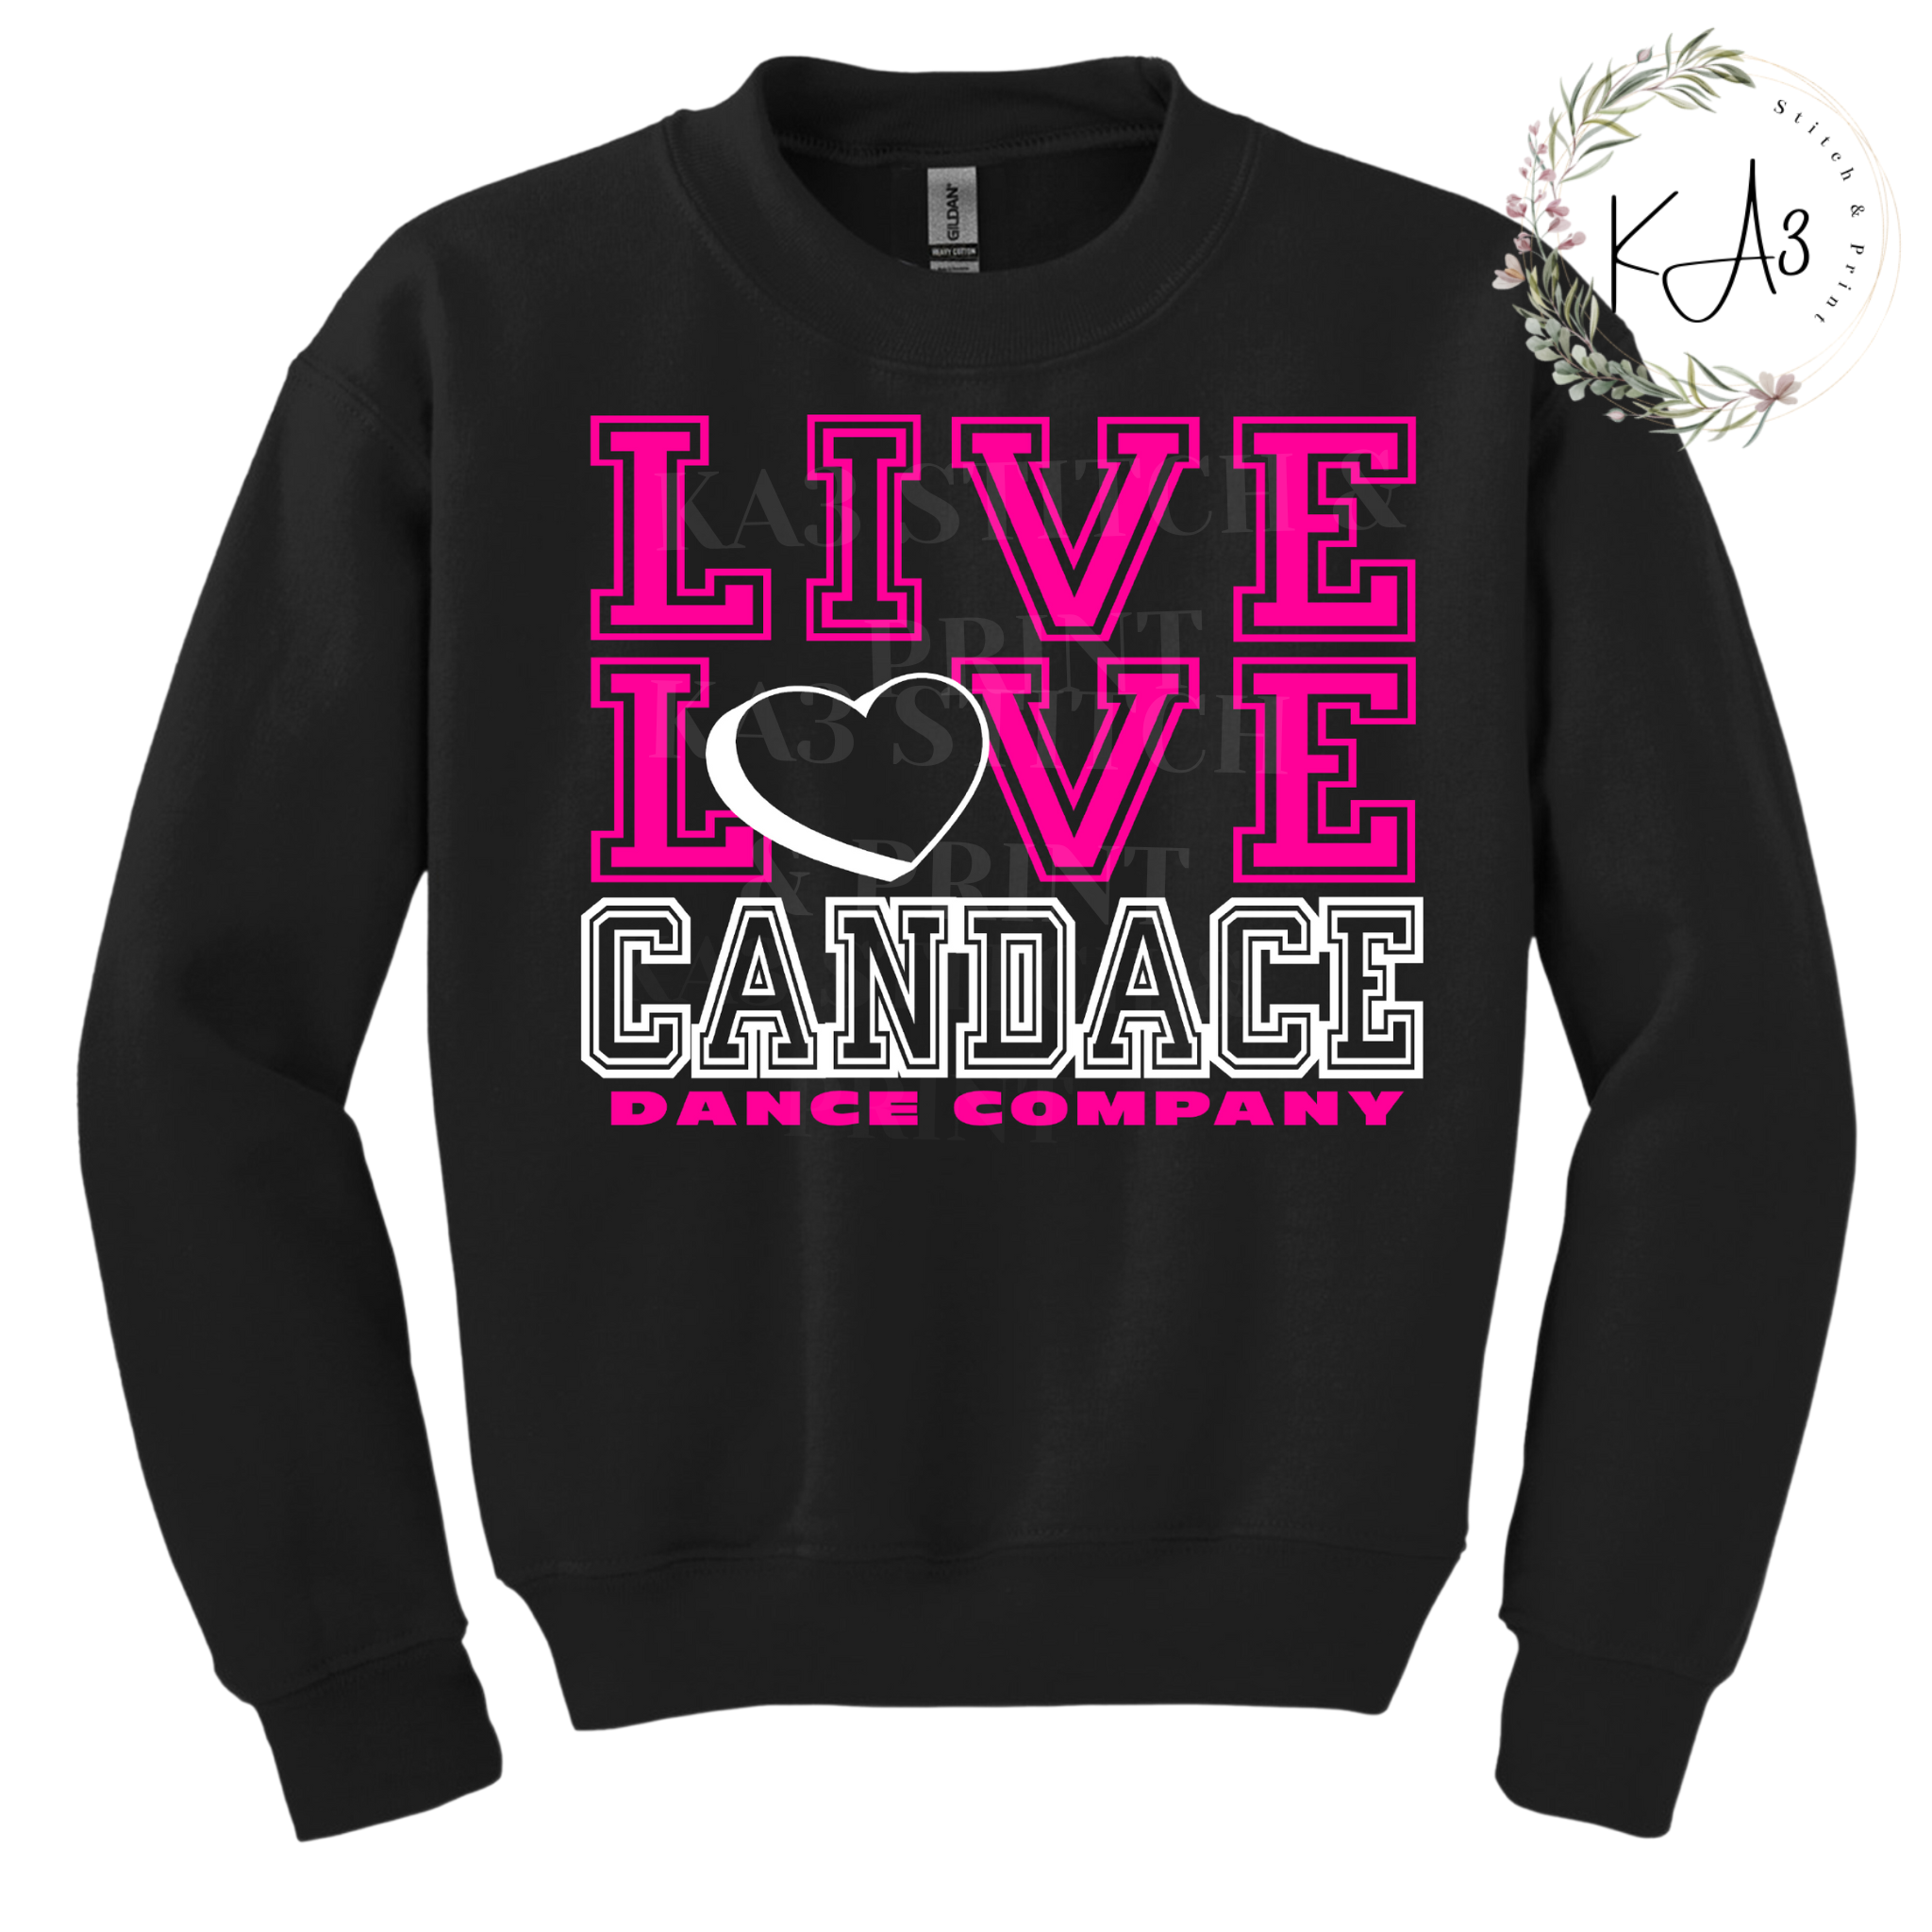 LIVE LOVE CANDACE DANCE COMPANY